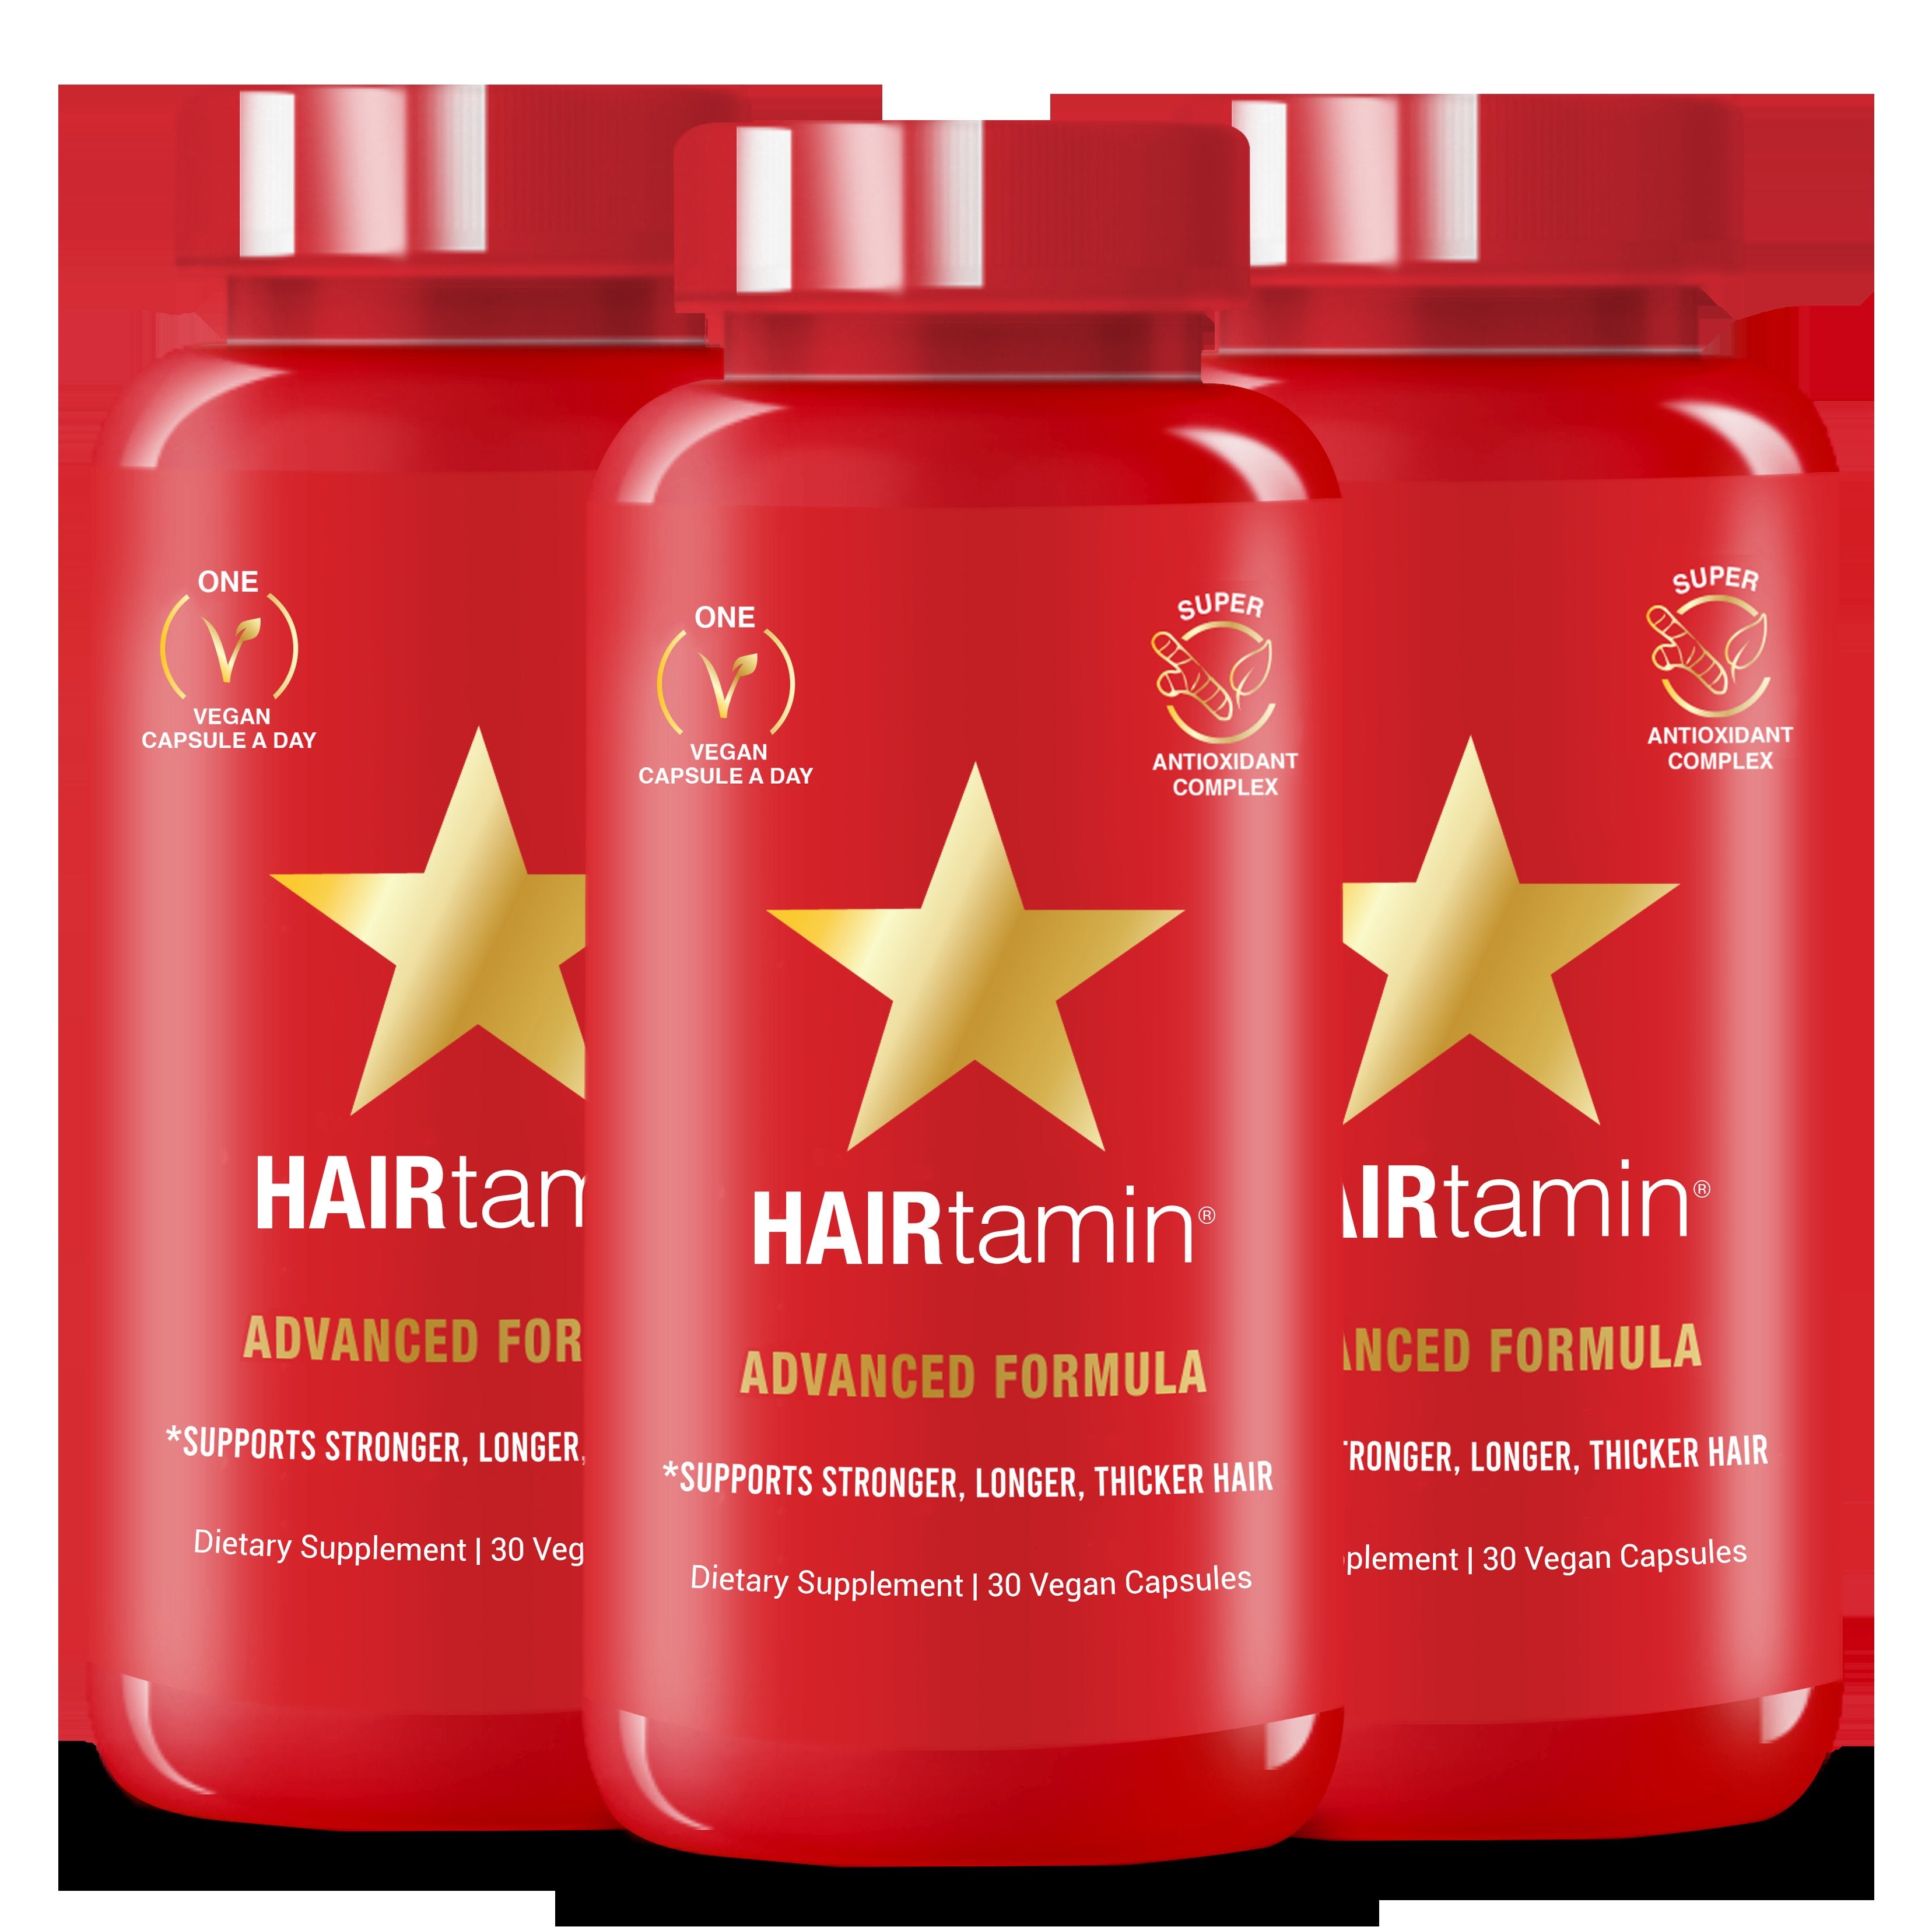 Vitamin & Haircare Bundles - Save on Hair Growth, Glowing Skin, Healthy ...